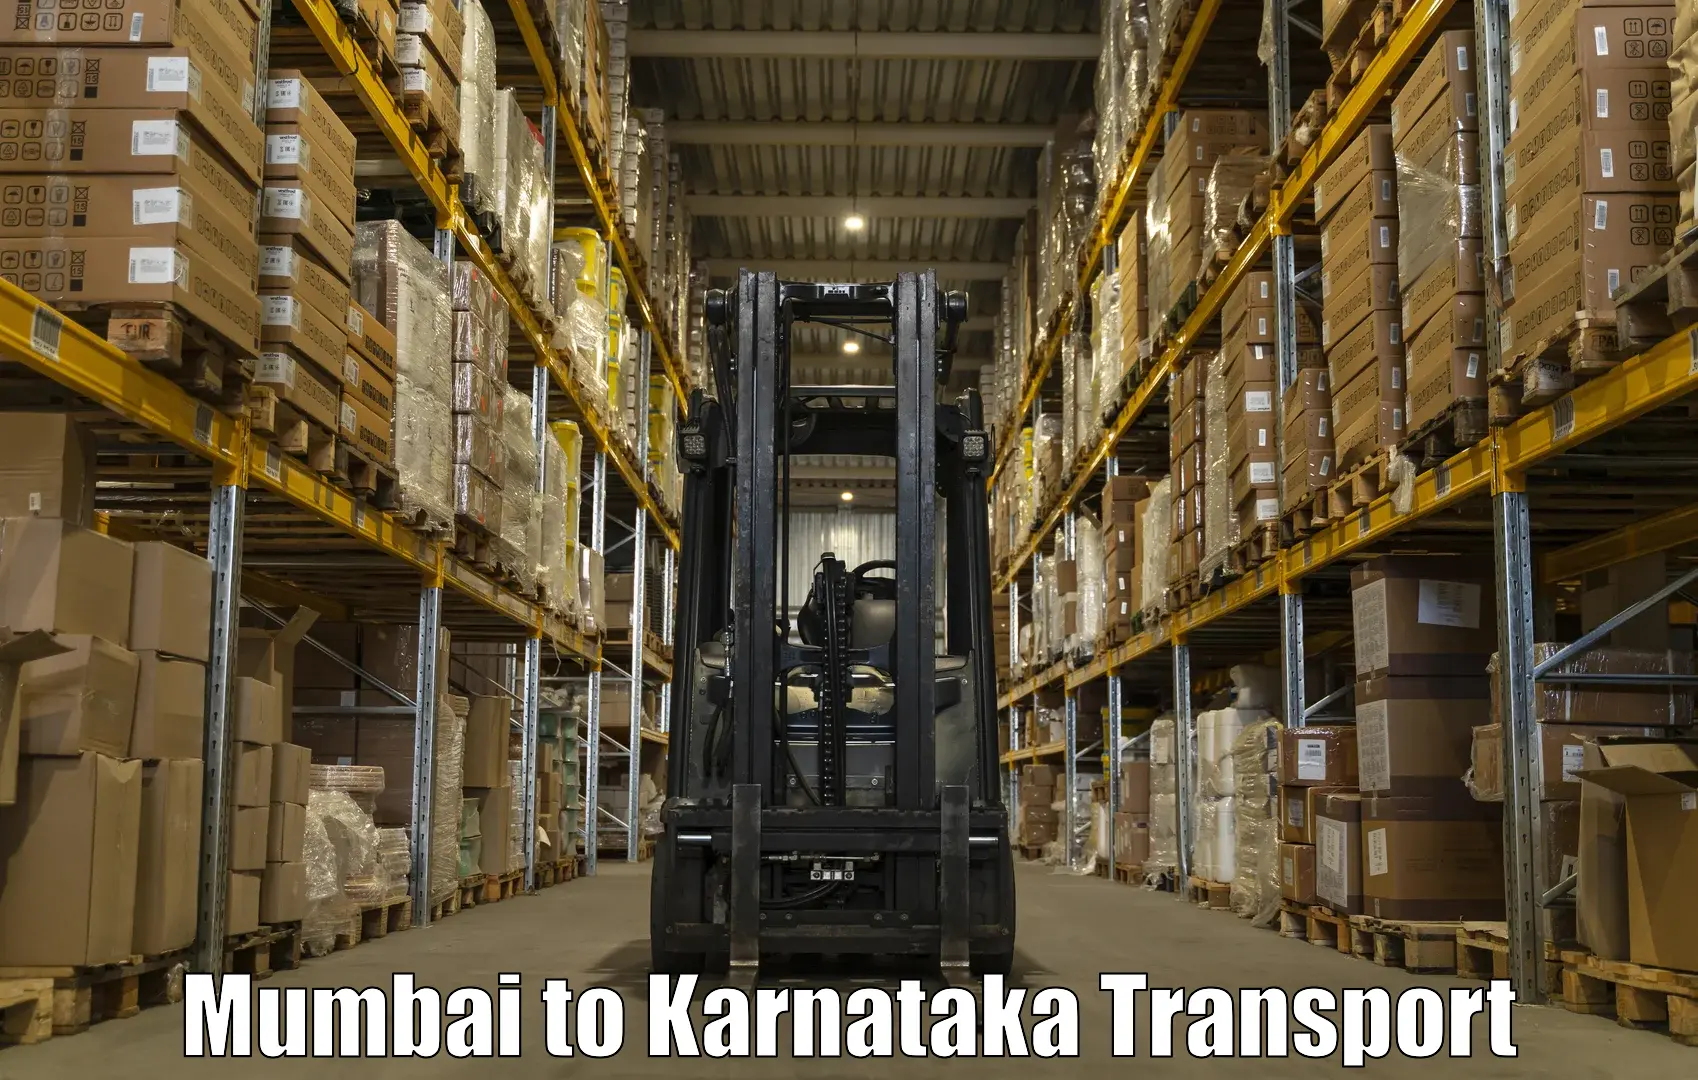 Bike transport service Mumbai to Karnataka